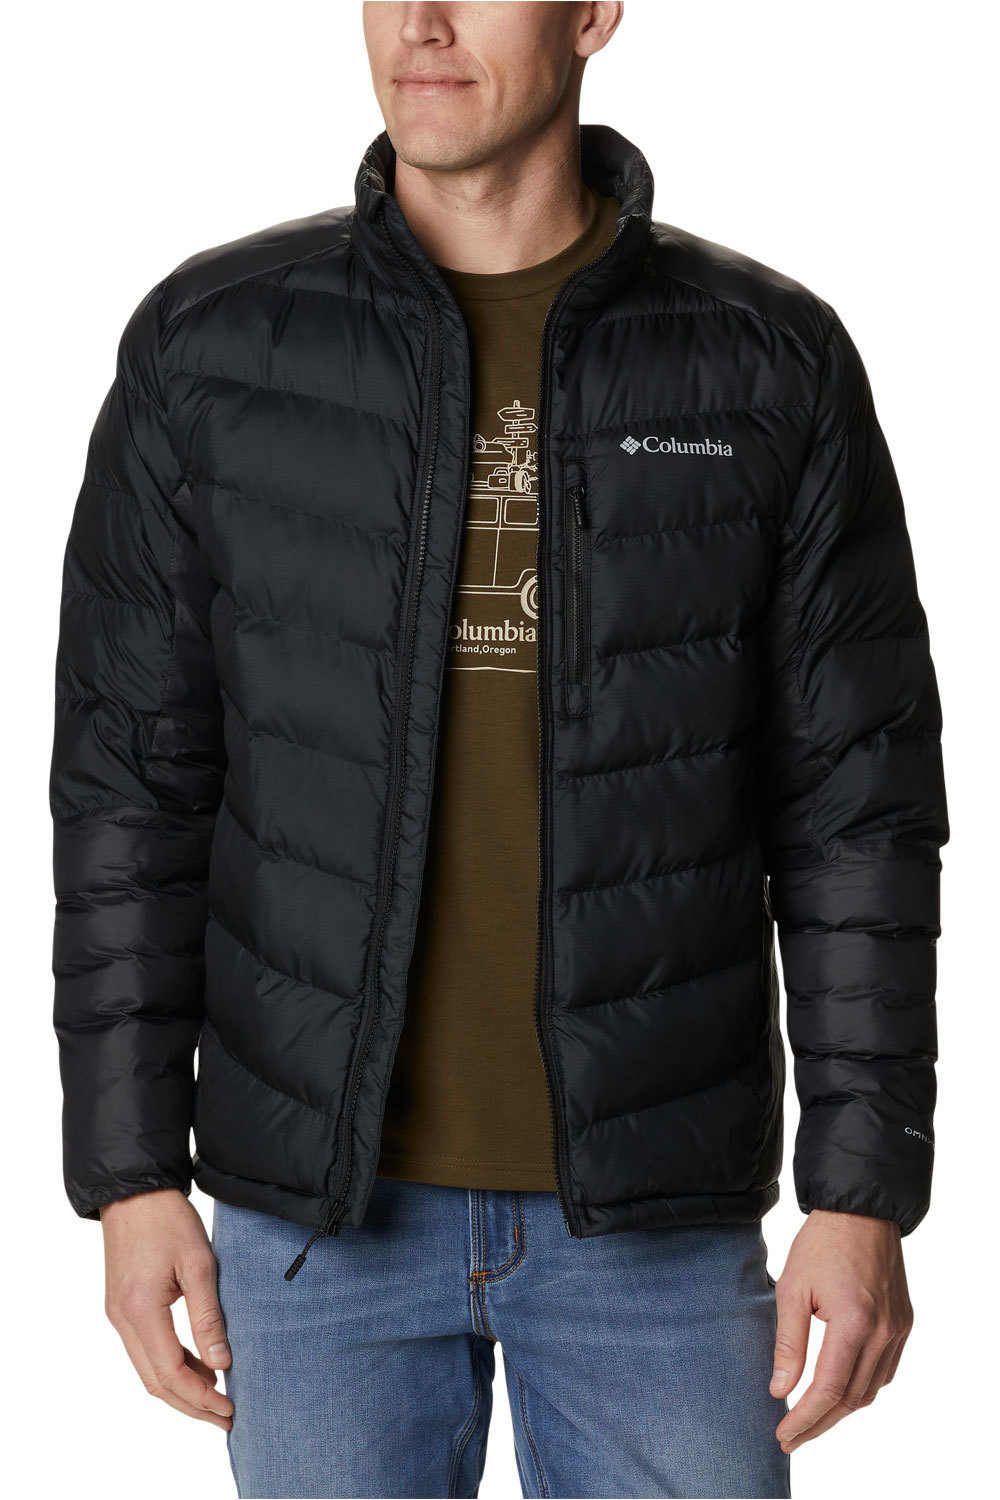 Columbia chaqueta outdoor hombre Labyrinth Loop Jacket vista frontal